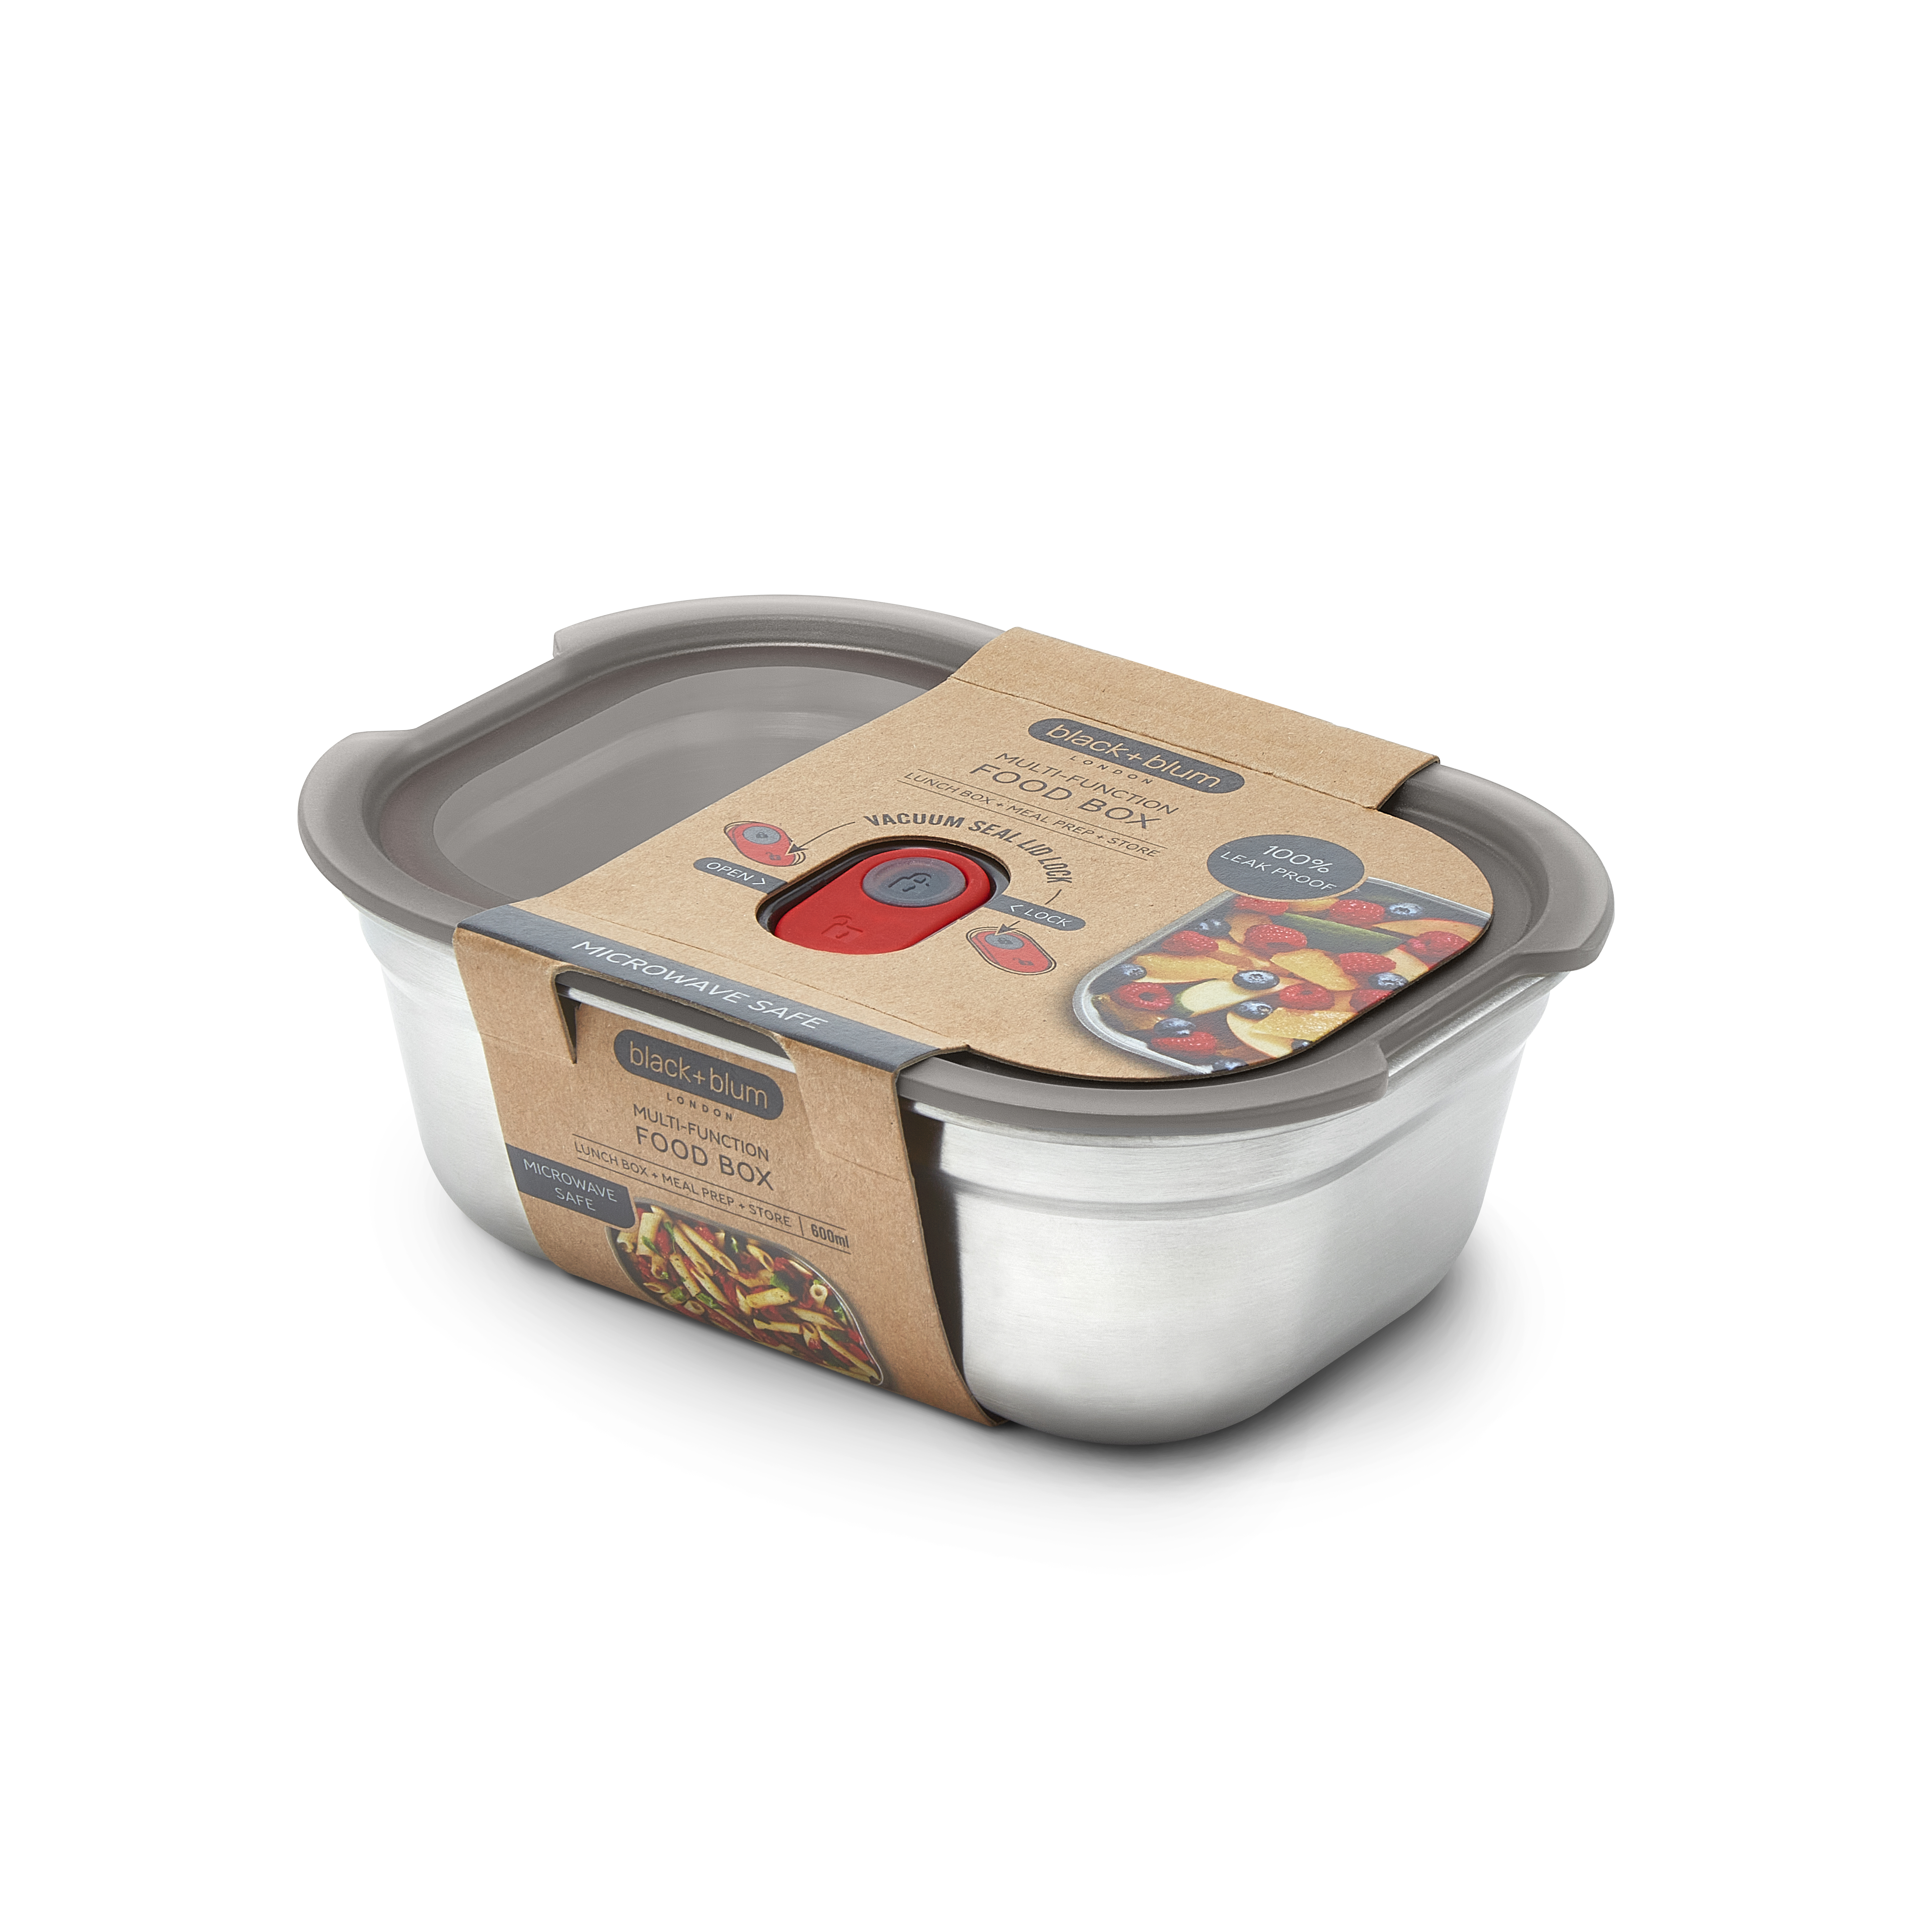 STEEL FOOD BOX Small - Lunchbox multifunktional (EN)